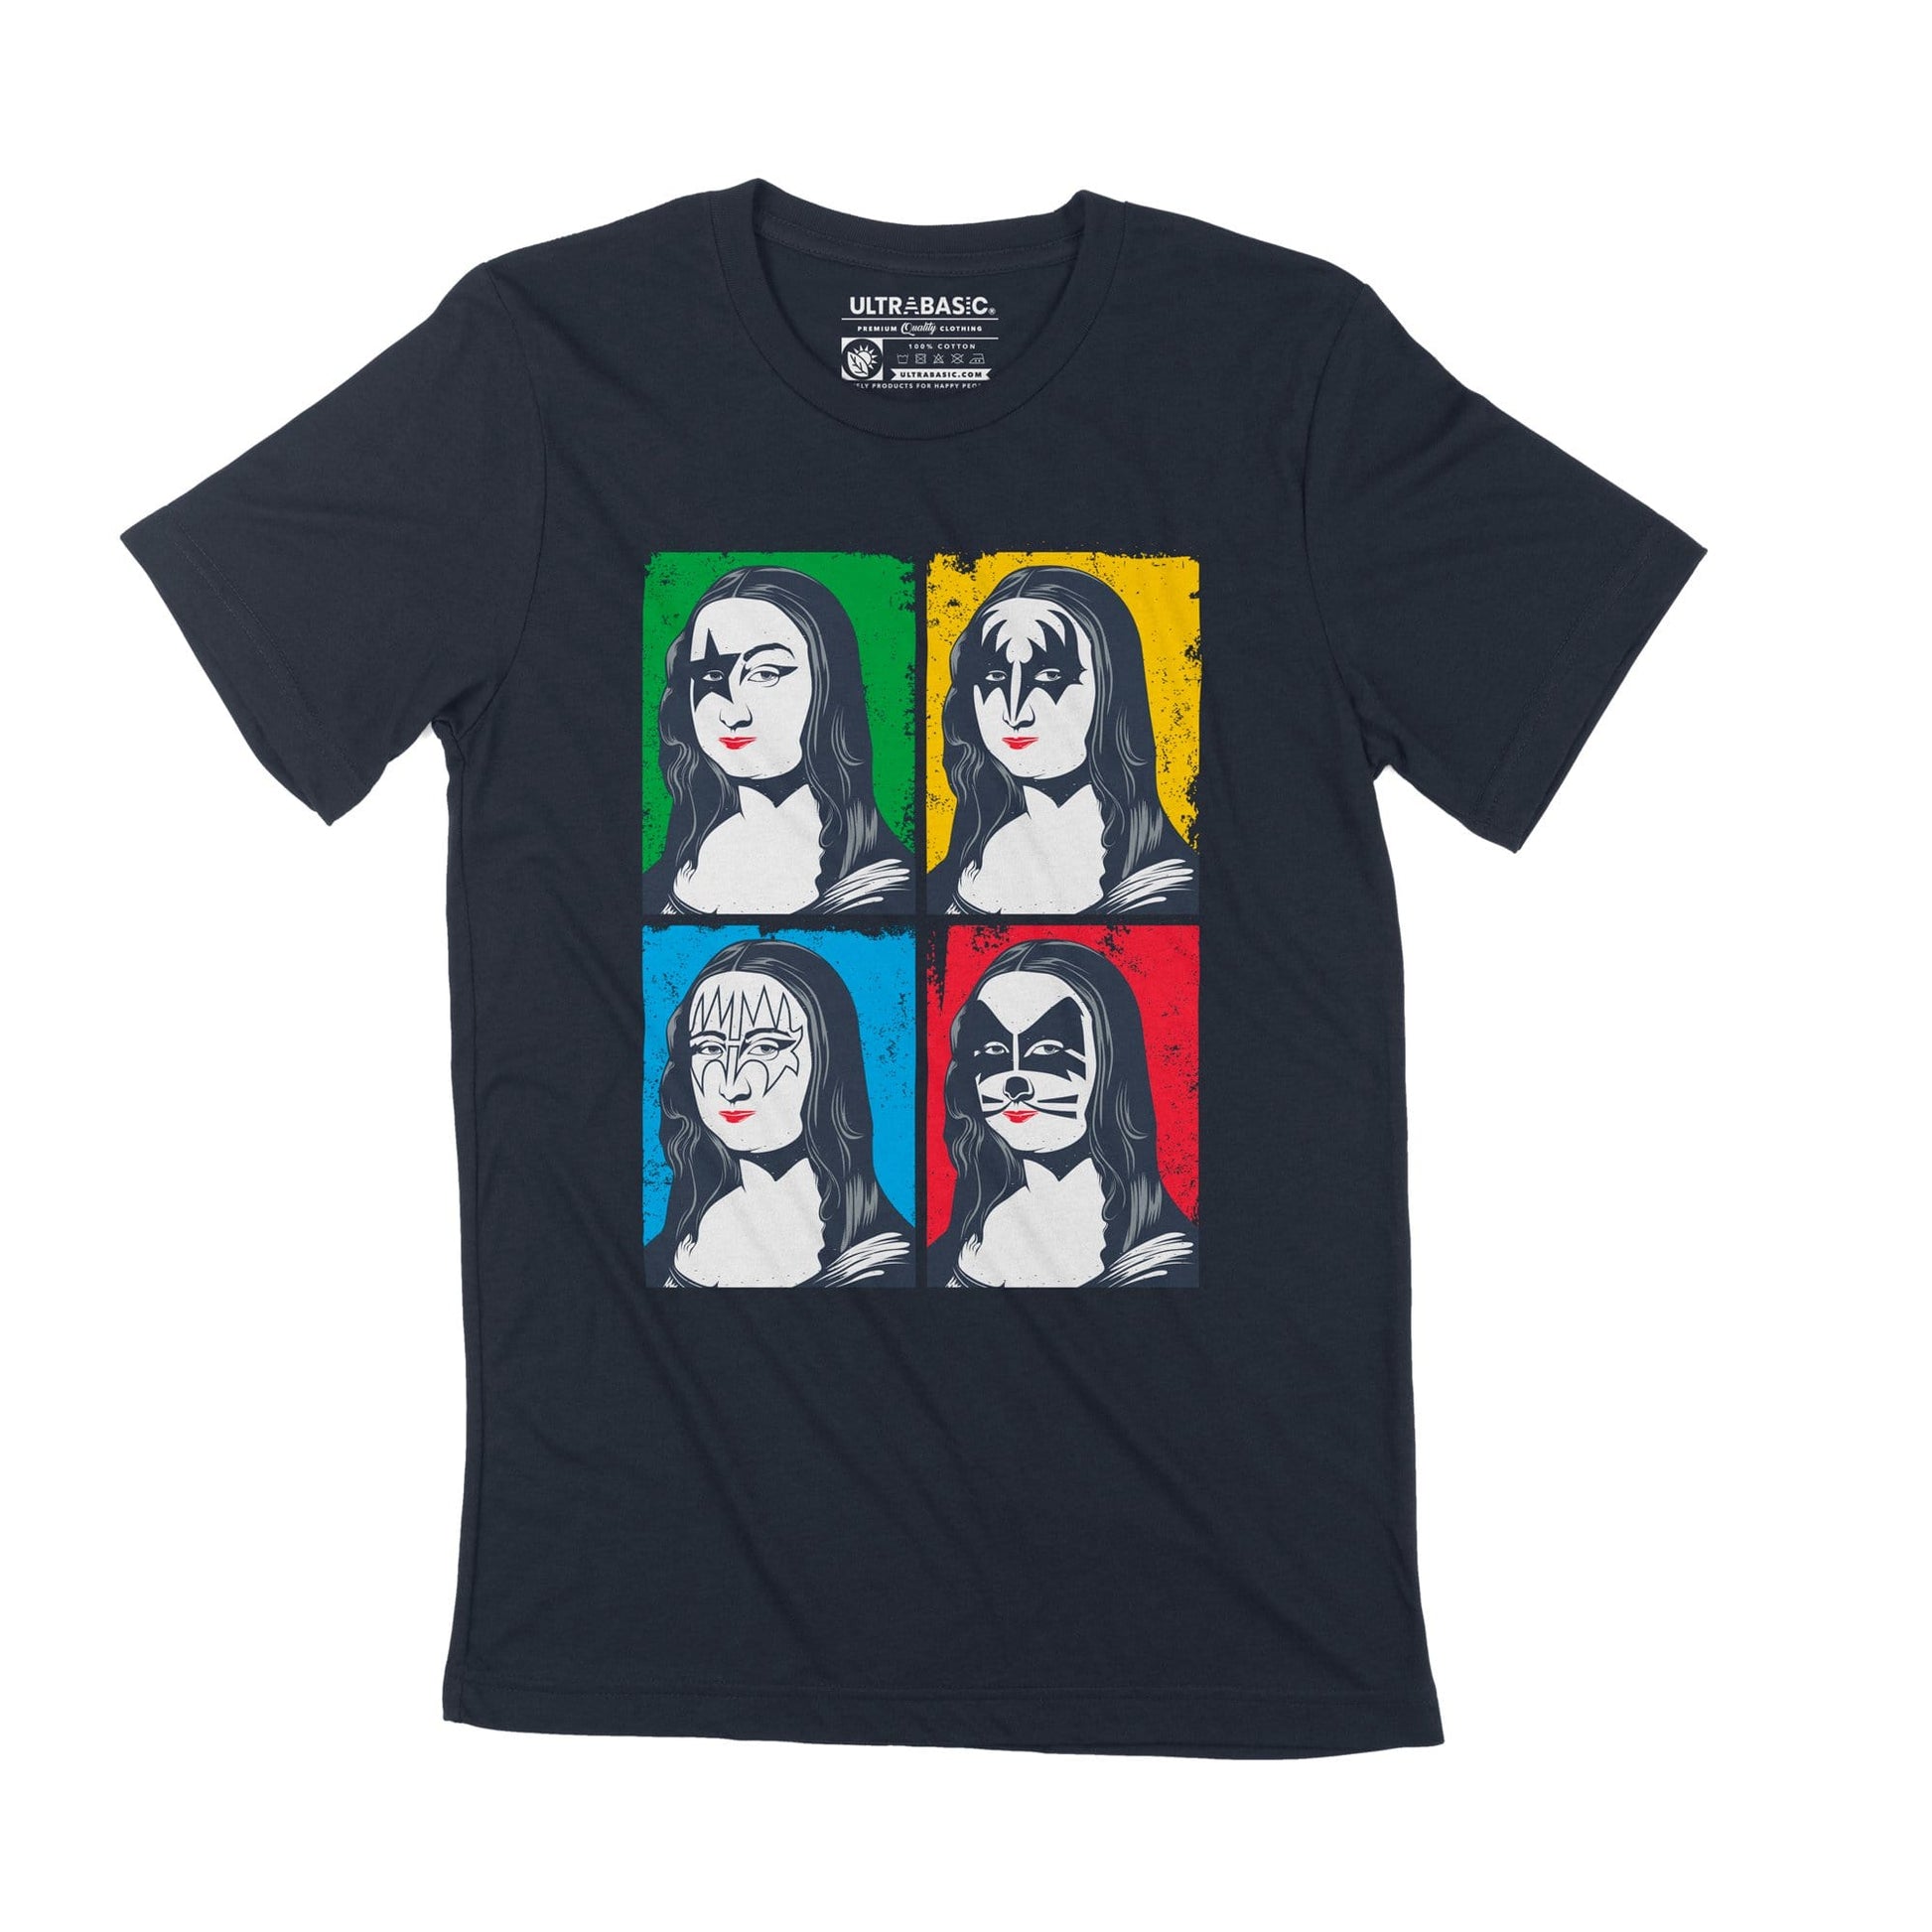 mona lisa leonardo da vinci pop art artist gifts tshirt design graphic tee funny lifestyle clothing urban printed